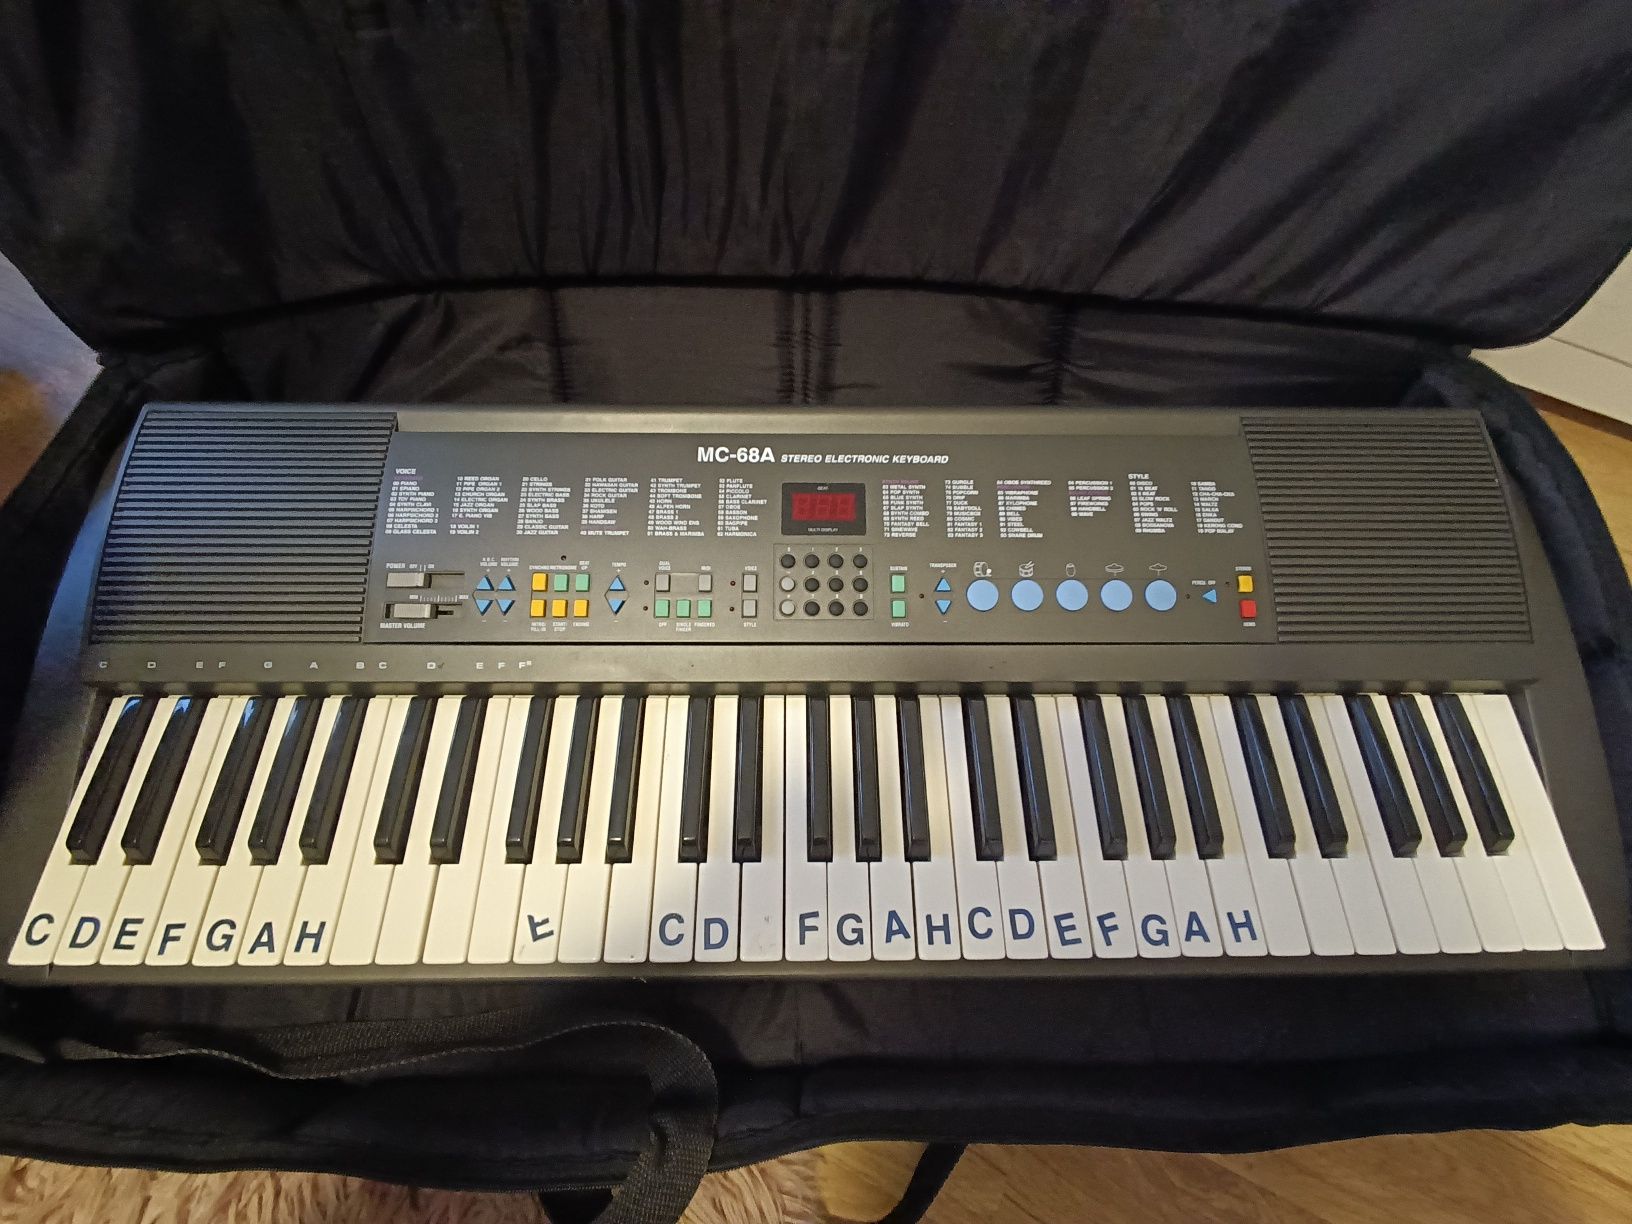 Keyboard mc-68a stereo electronic